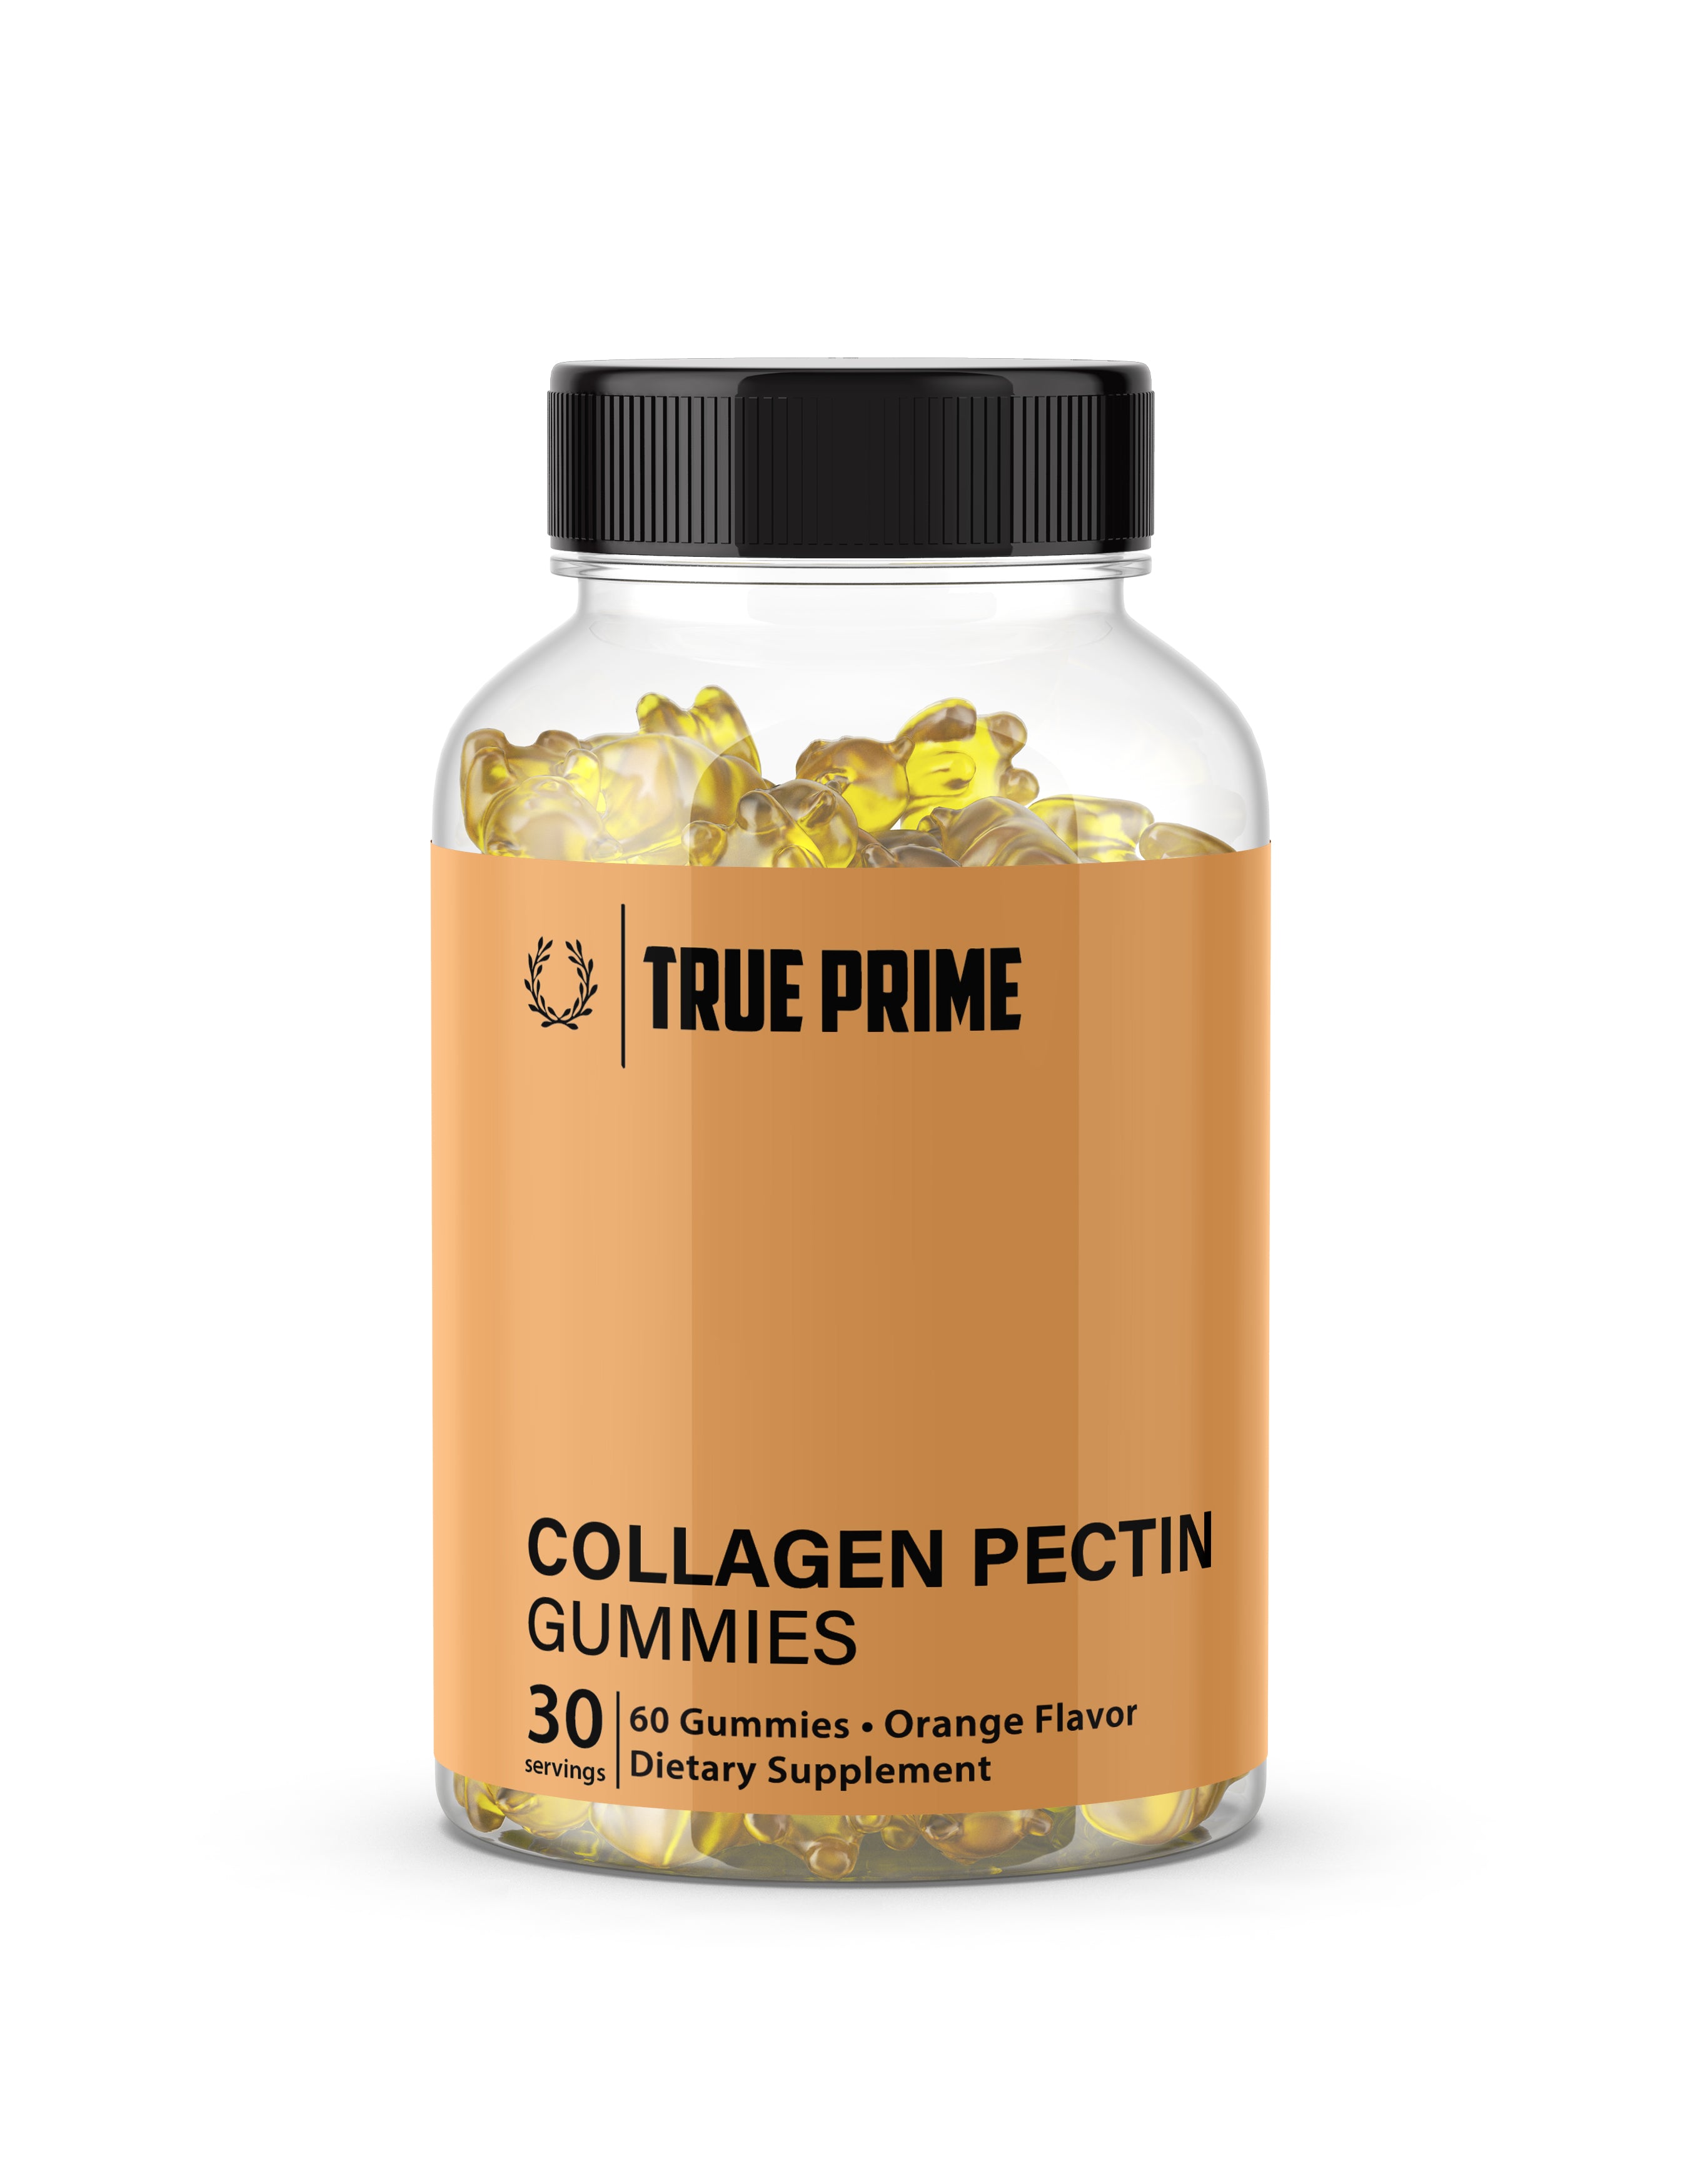 Collagen Pectin Gummies - Premium Skincare and Joint Support - 60 Chewable Capsules - True Prime Nutrition 